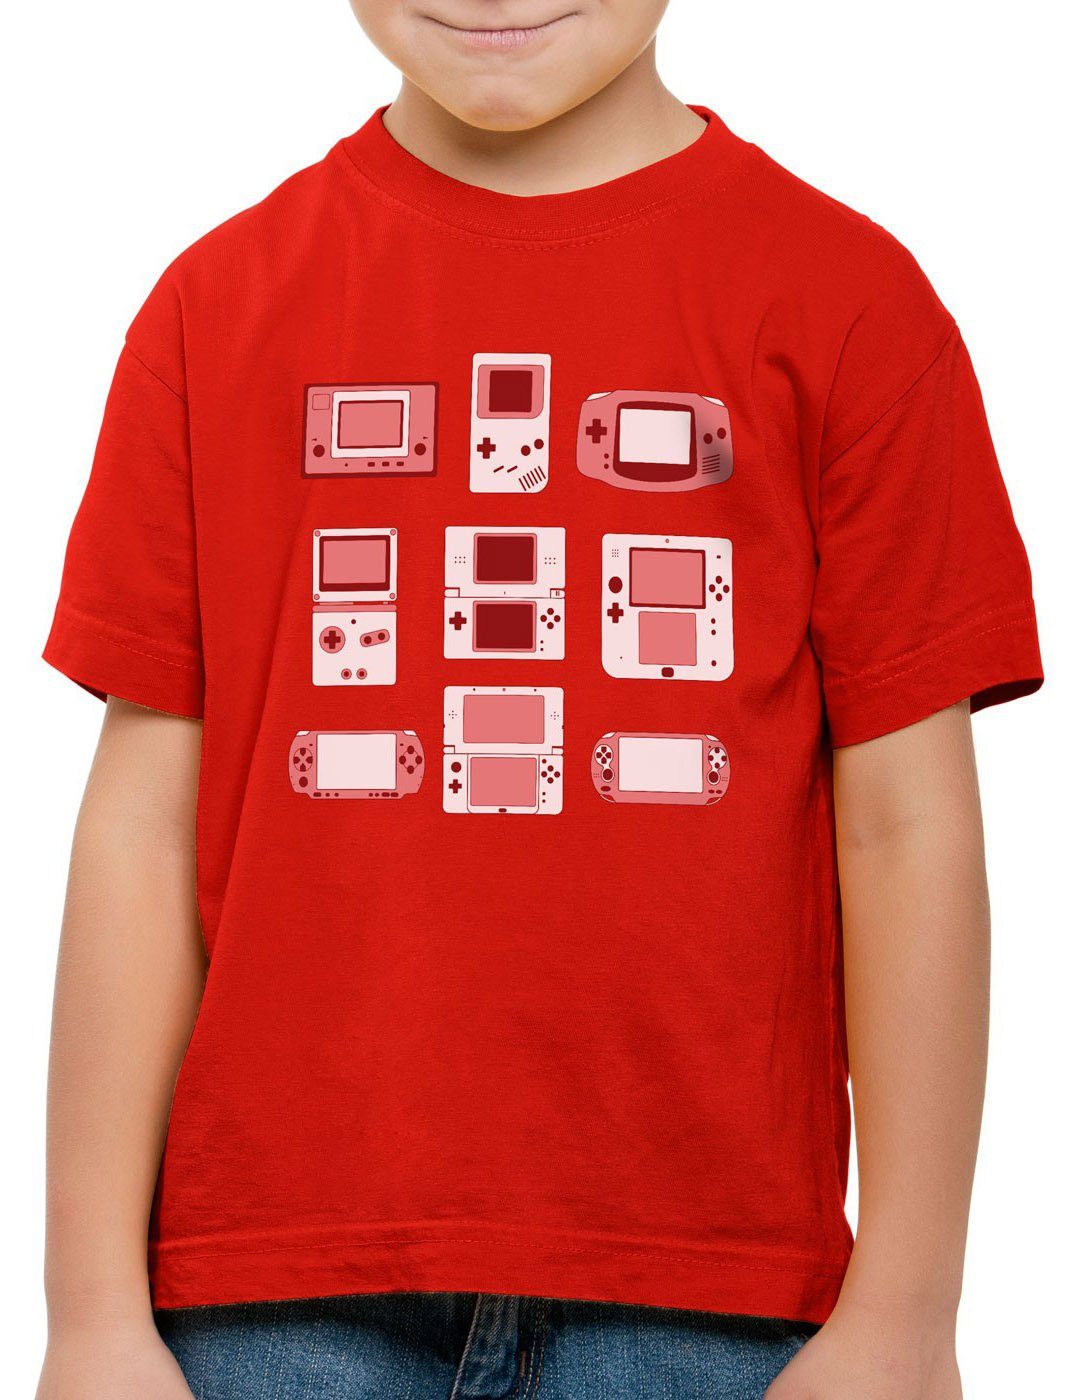 style3 Print-Shirt Kinder T-Shirt videospiel rot spielekonsole controller Konsole Handheld